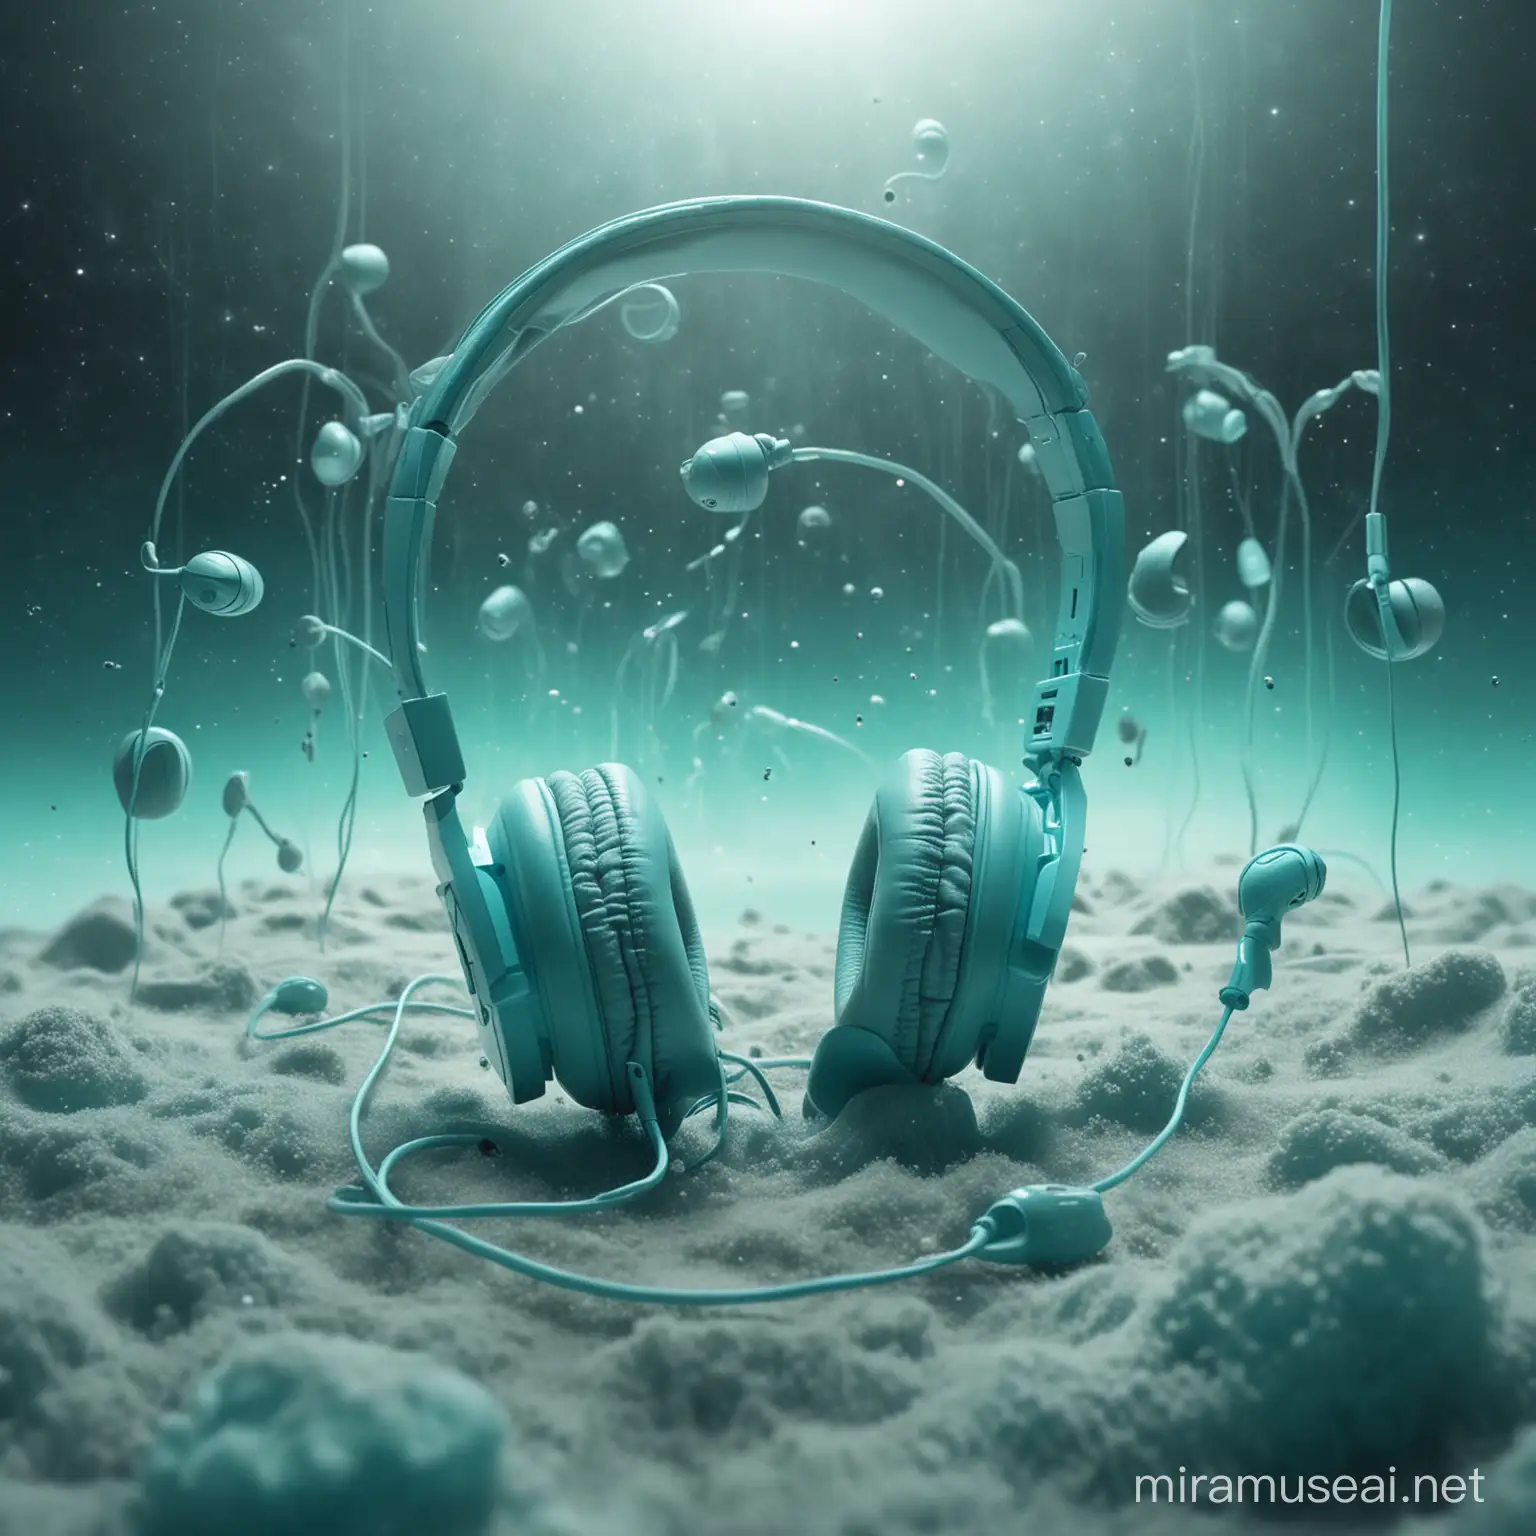 Cyan Headphones in Dreamlike Abstract Communication Space